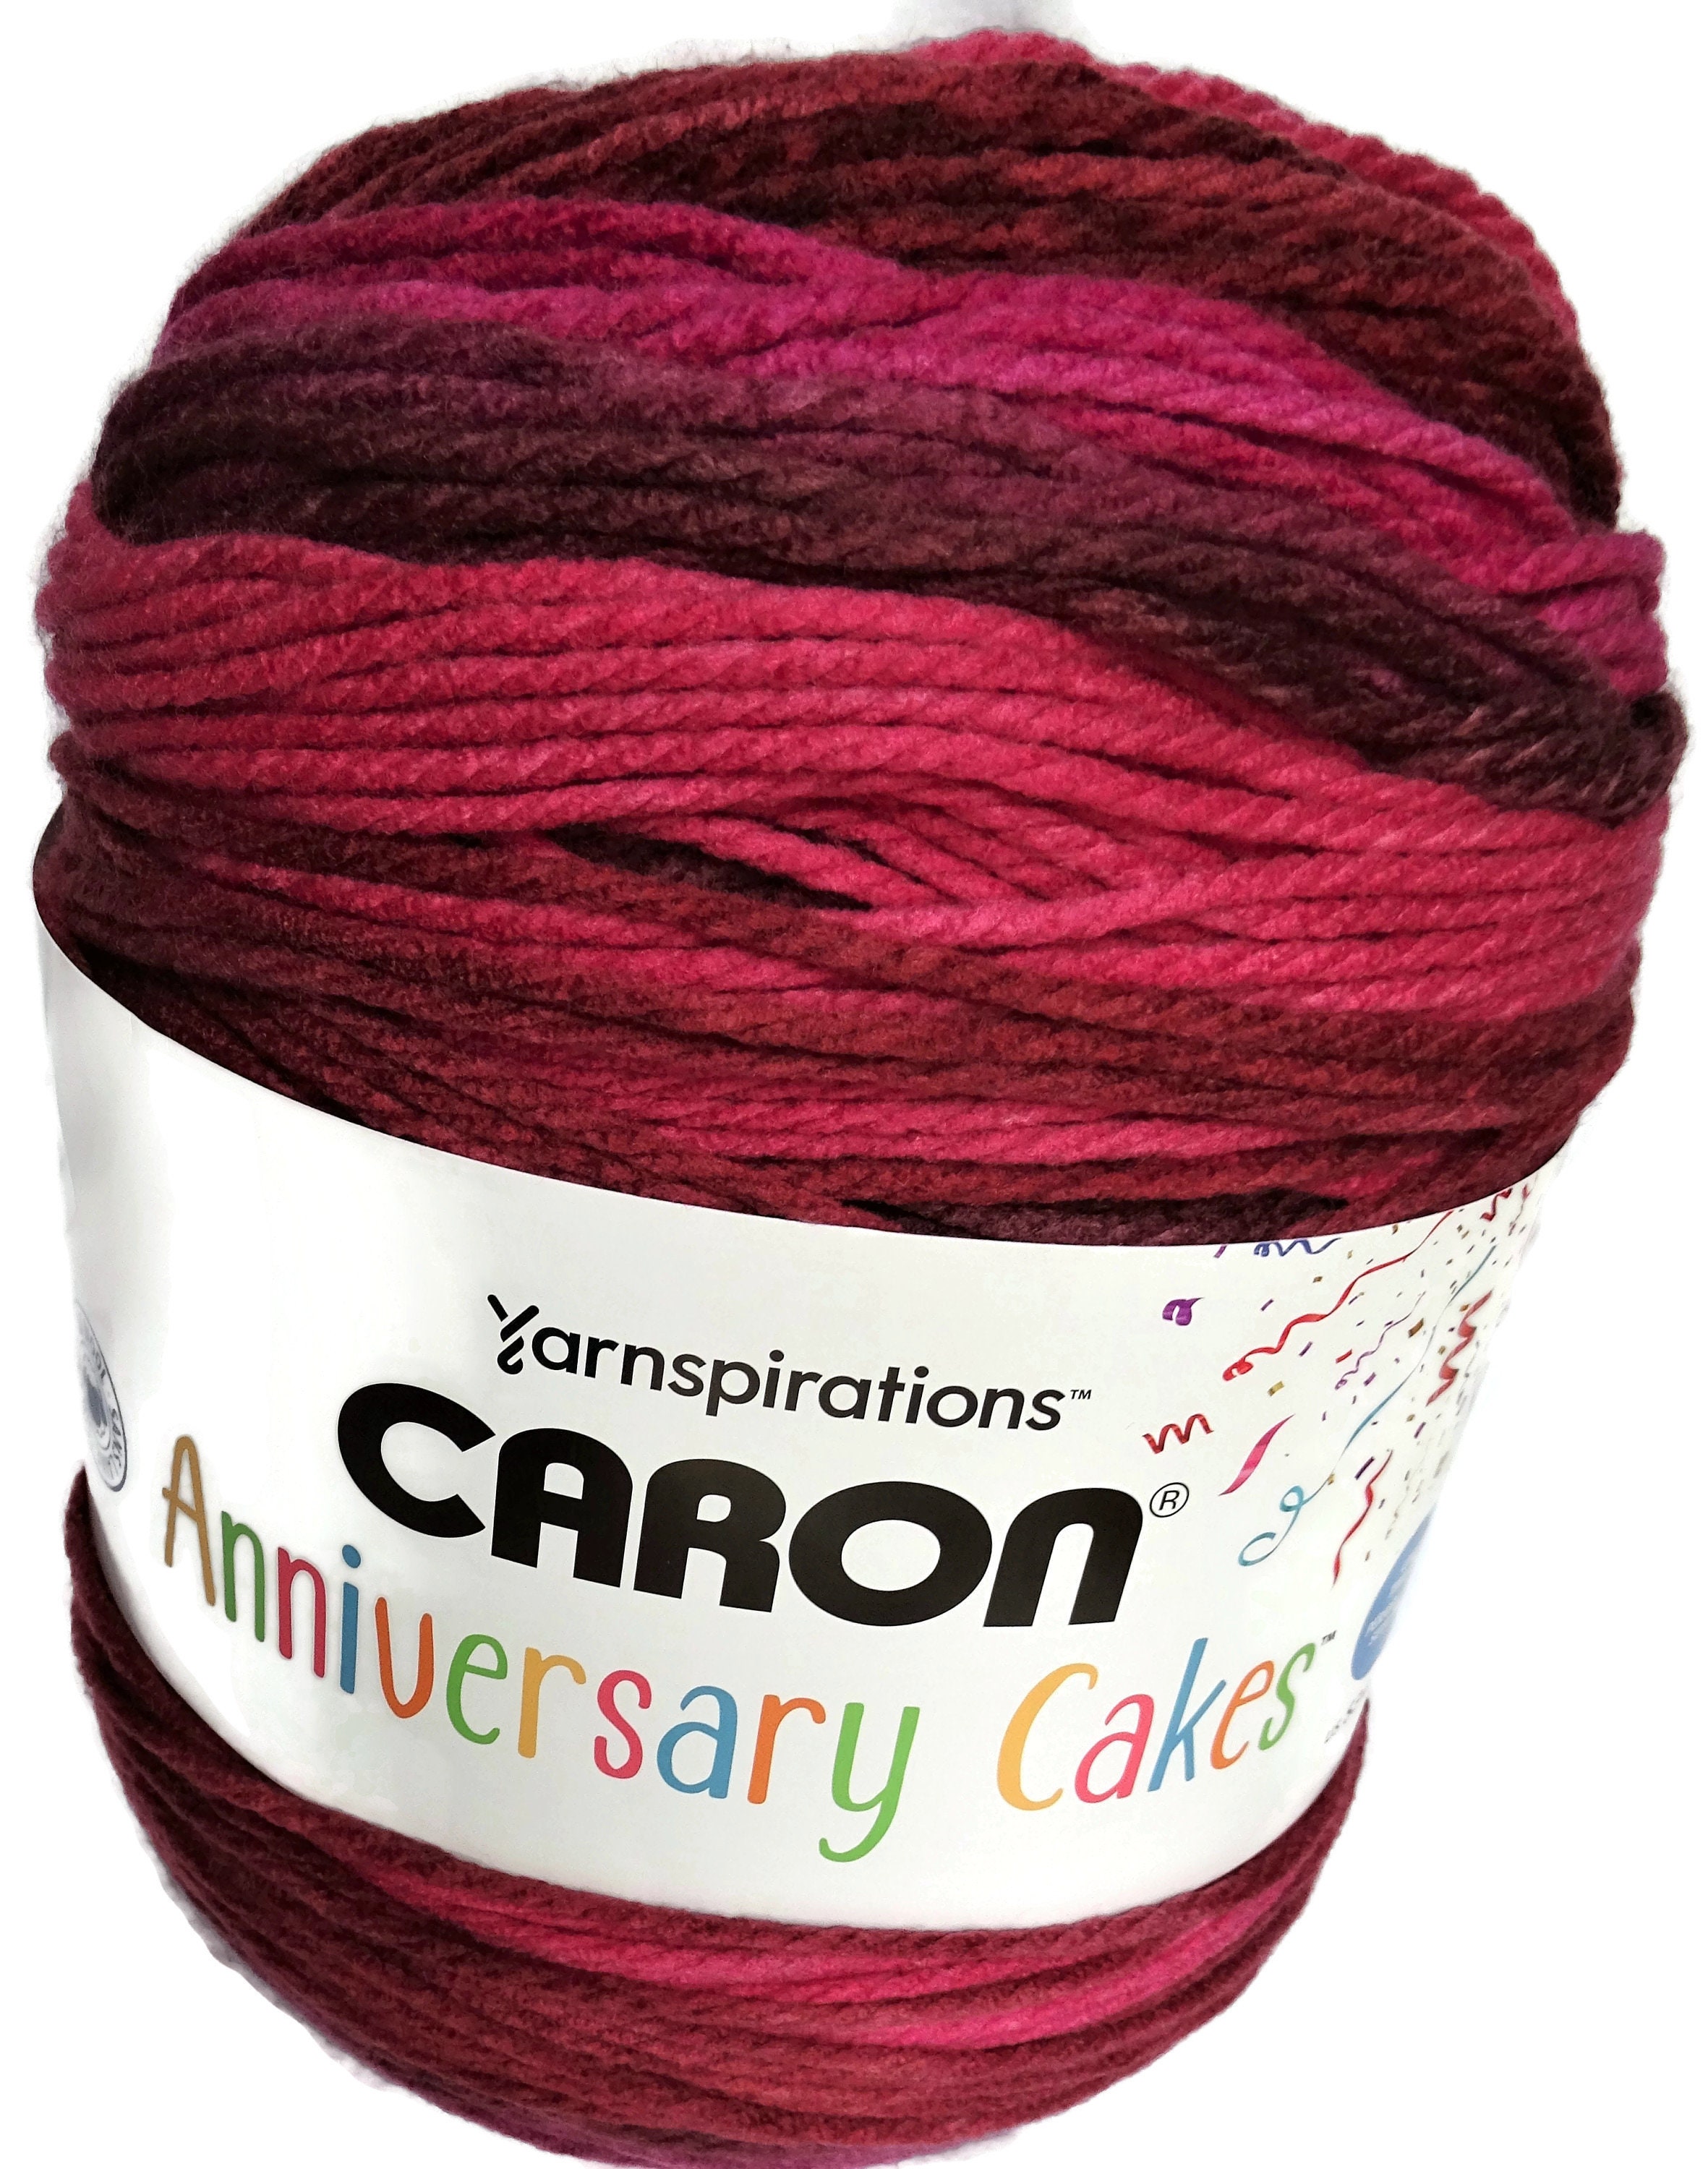 Caron Anniversary Cakes Yarn Sour Cherry 